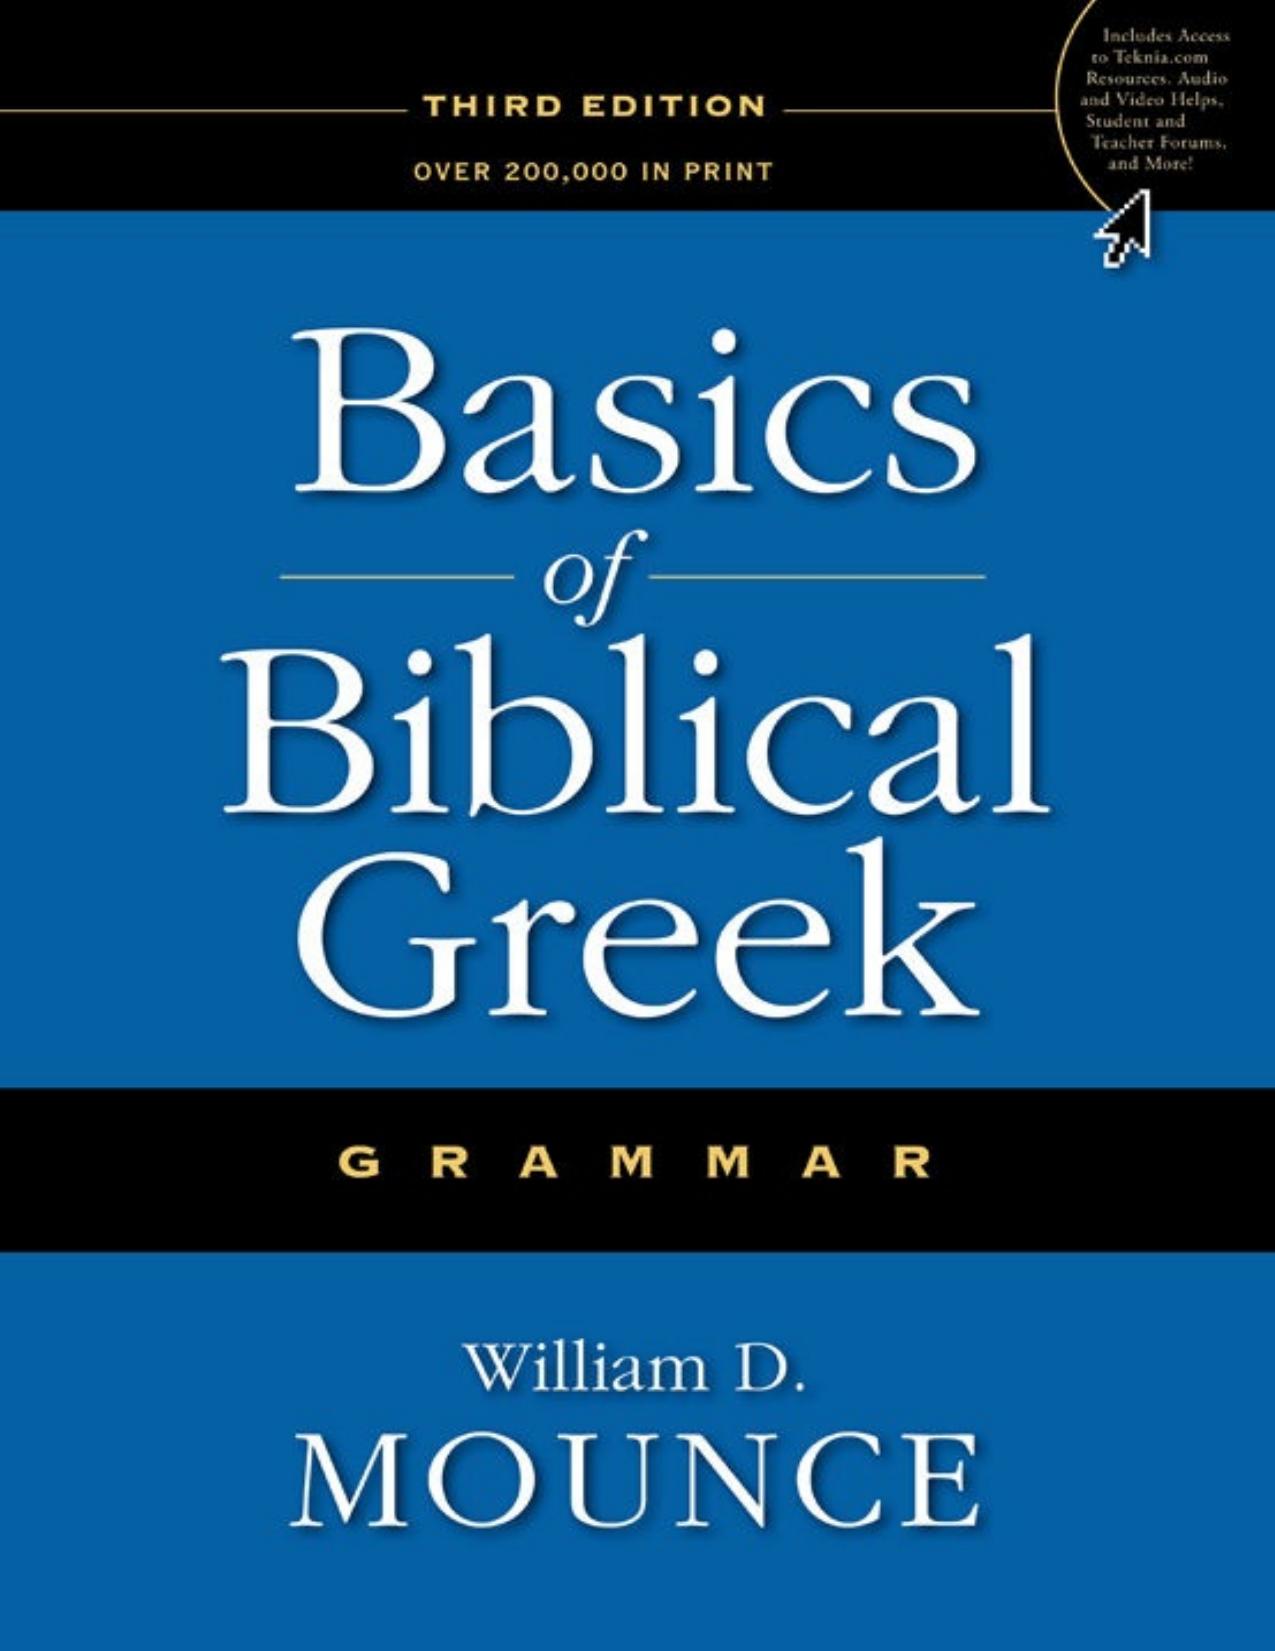 Basics of Biblical Greek Grammar - PDFDrive.com